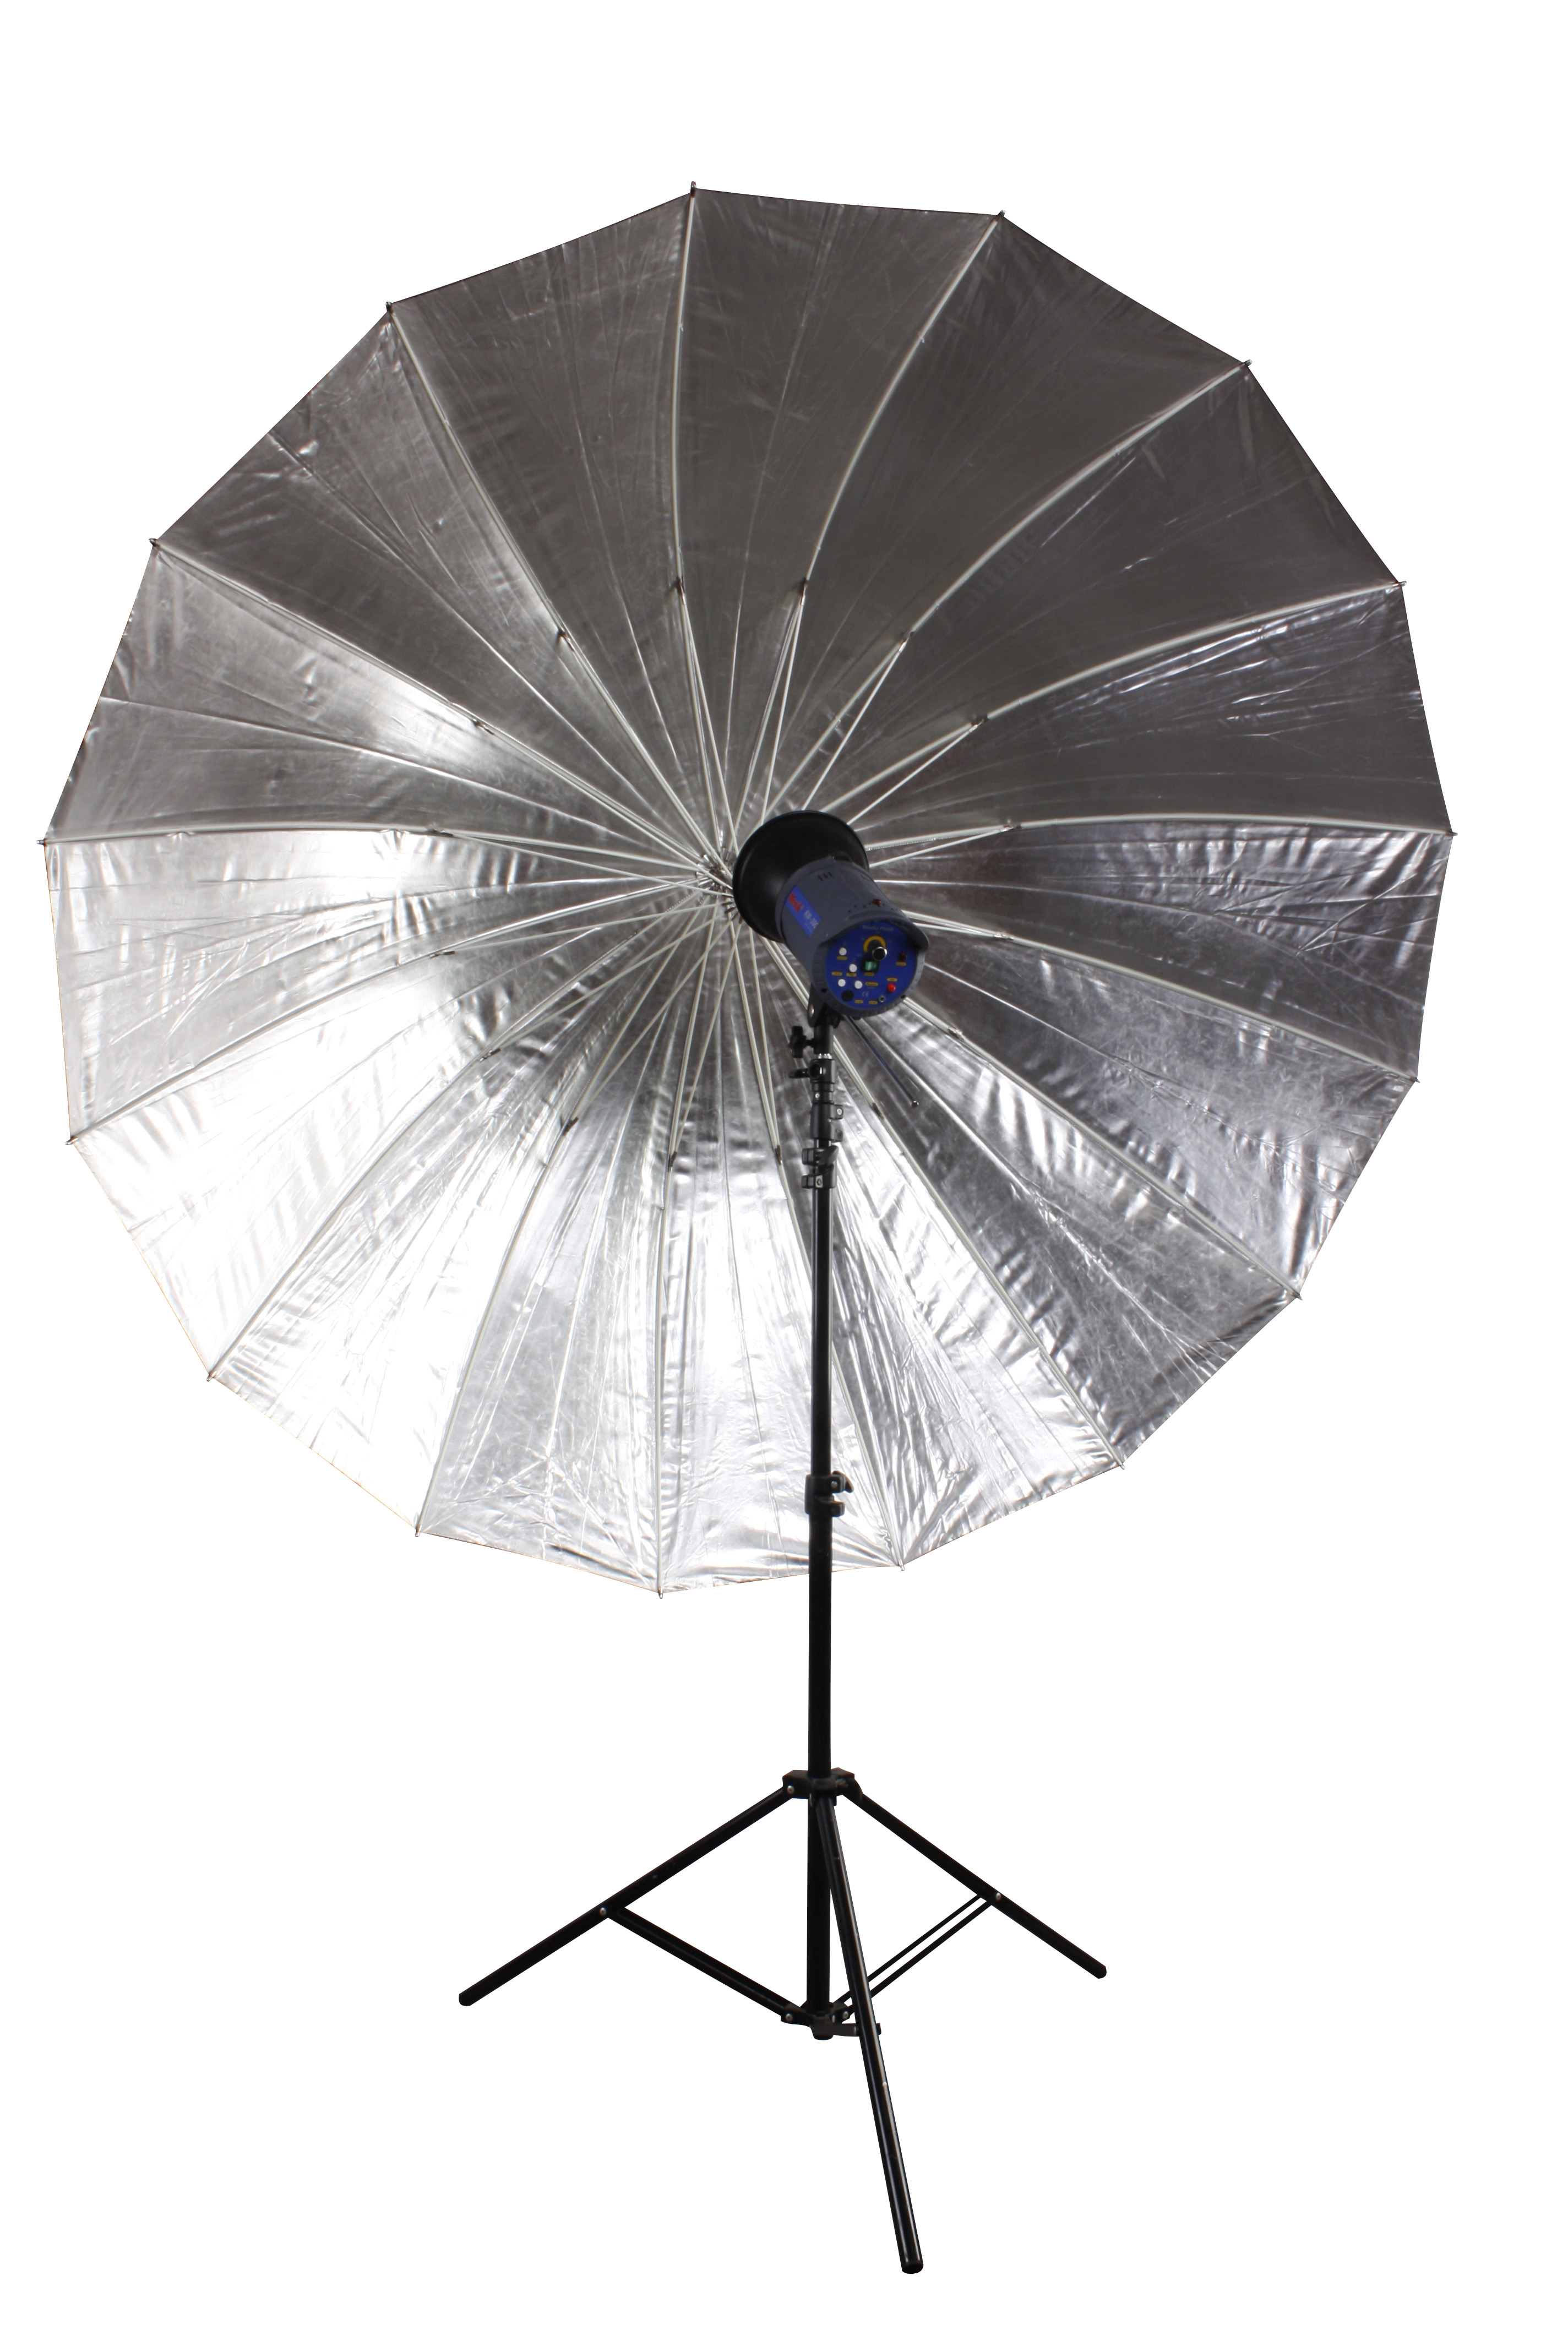 BRESSER SM-09 Jumbo Reflective Umbrella silver/black 180 cm 